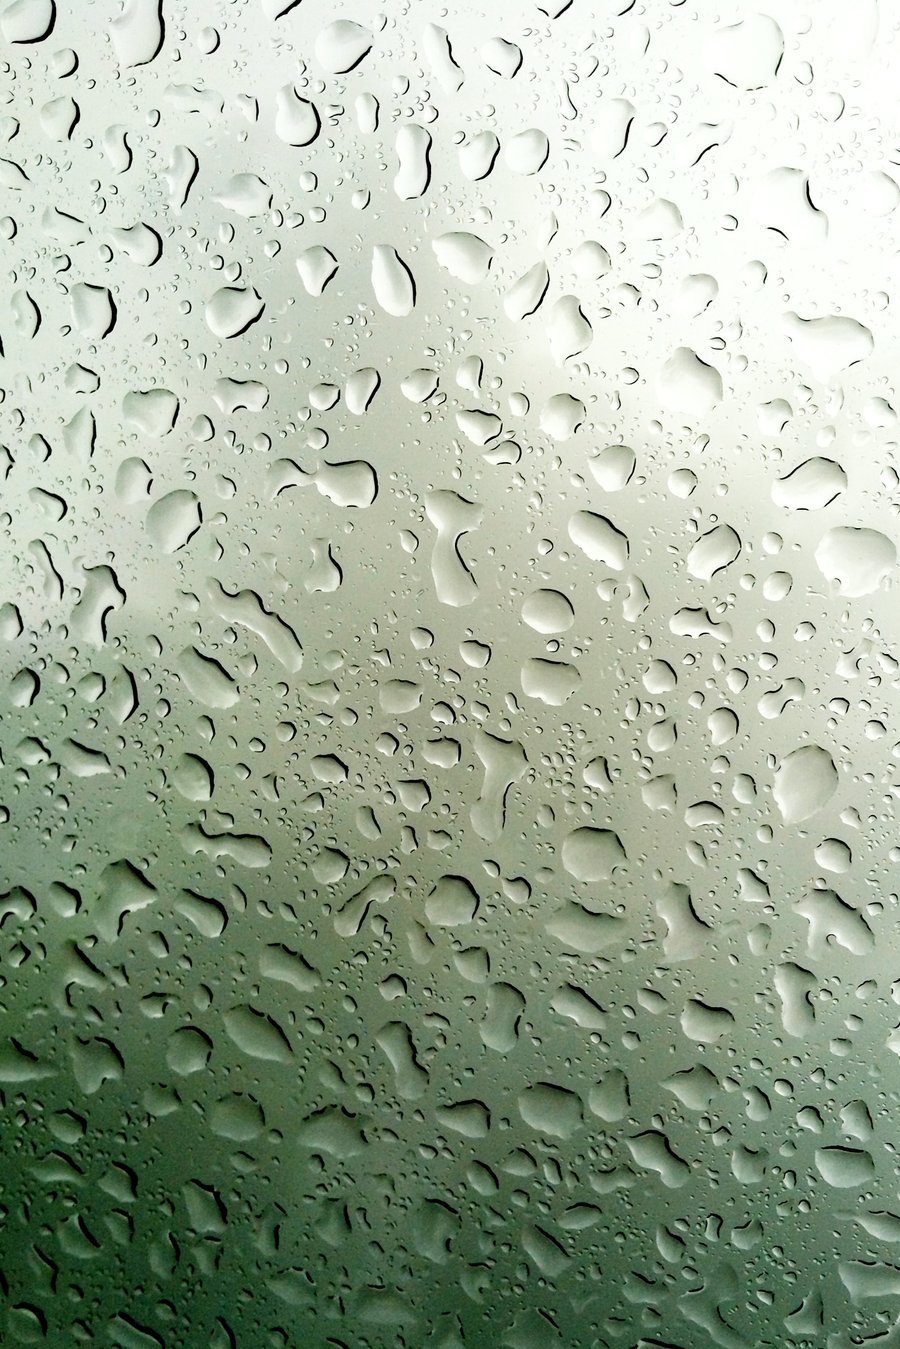 iPhone Wallpaper Raindrops By Clokverkorange Customization